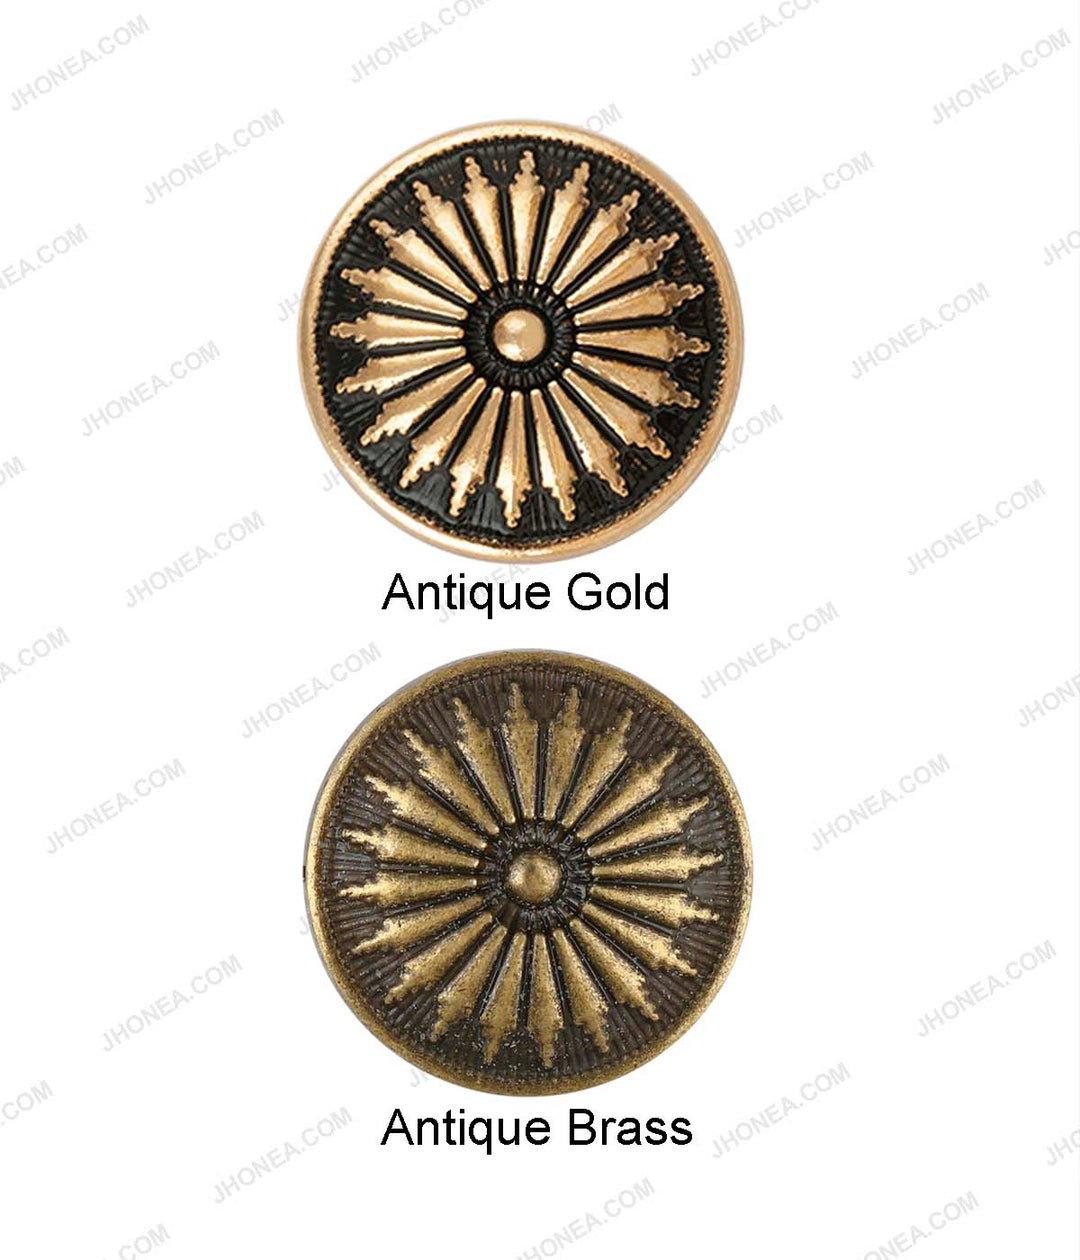 Antique Brass & Antique Gold Chakra Design Ethnic Buttons